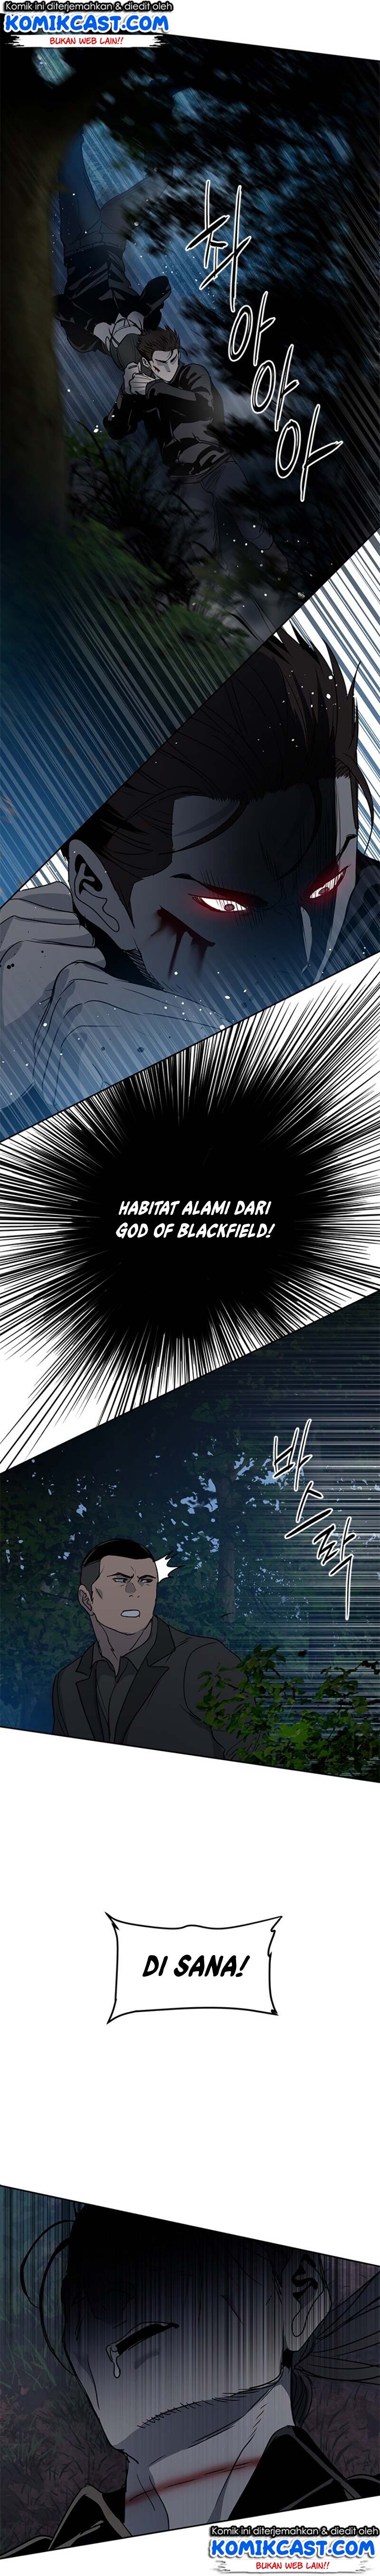 God Of Blackfield Chapter 54